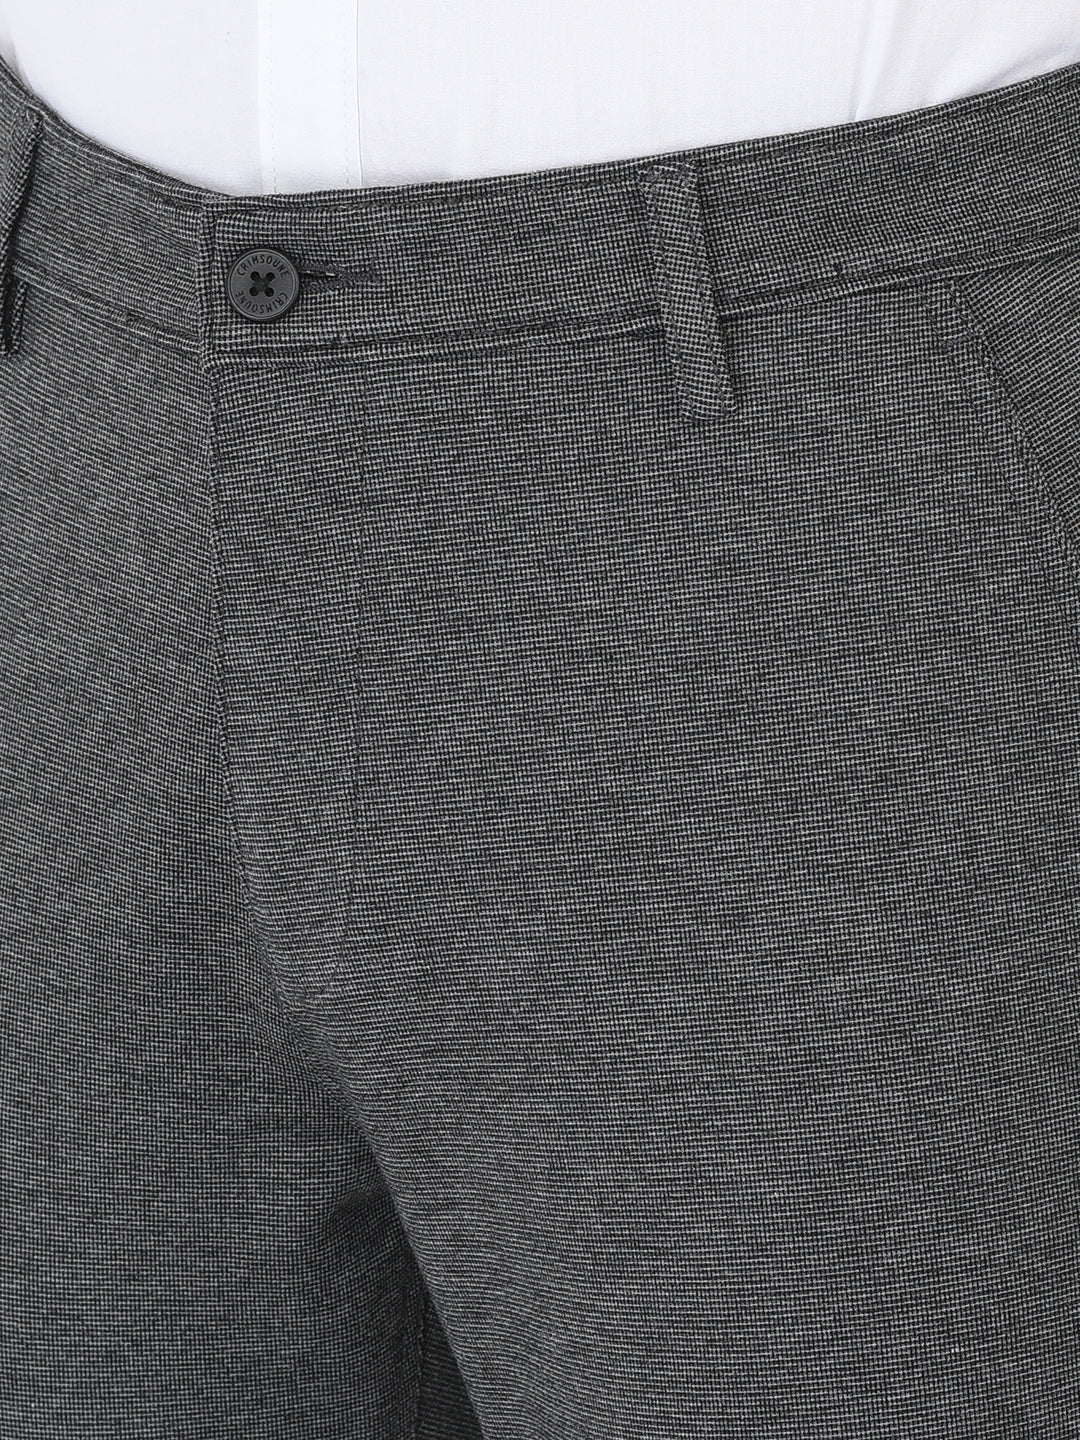 Grey Trousers - Men Trousers